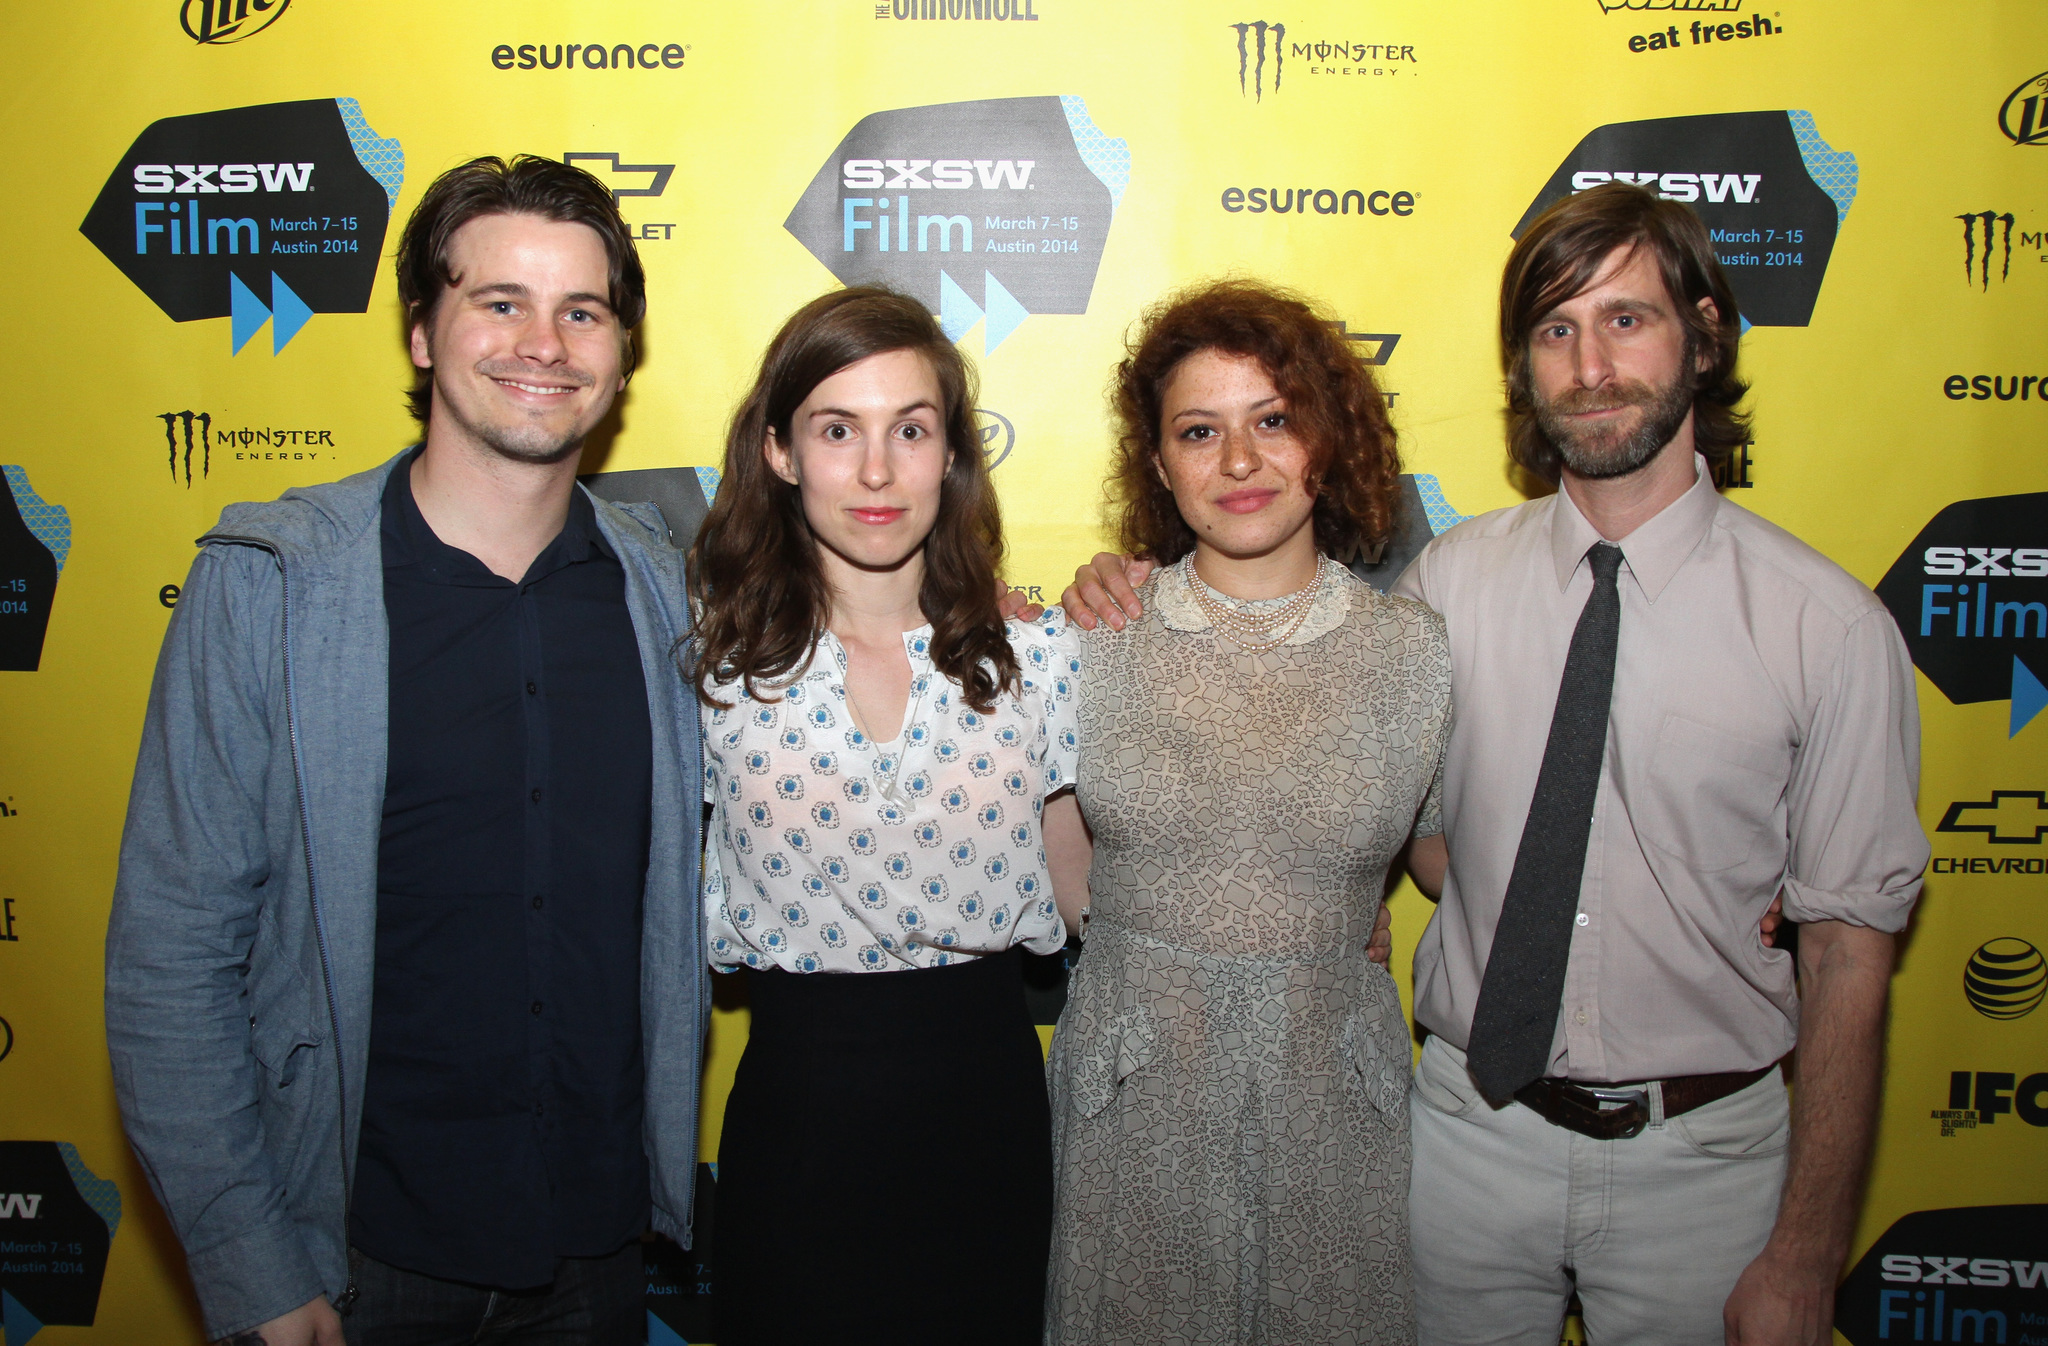 Michael Levine, Jason Ritter, Alia Shawkat, Lawrence Michael Levine and Sophia Takal at event of Wild Canaries (2014)